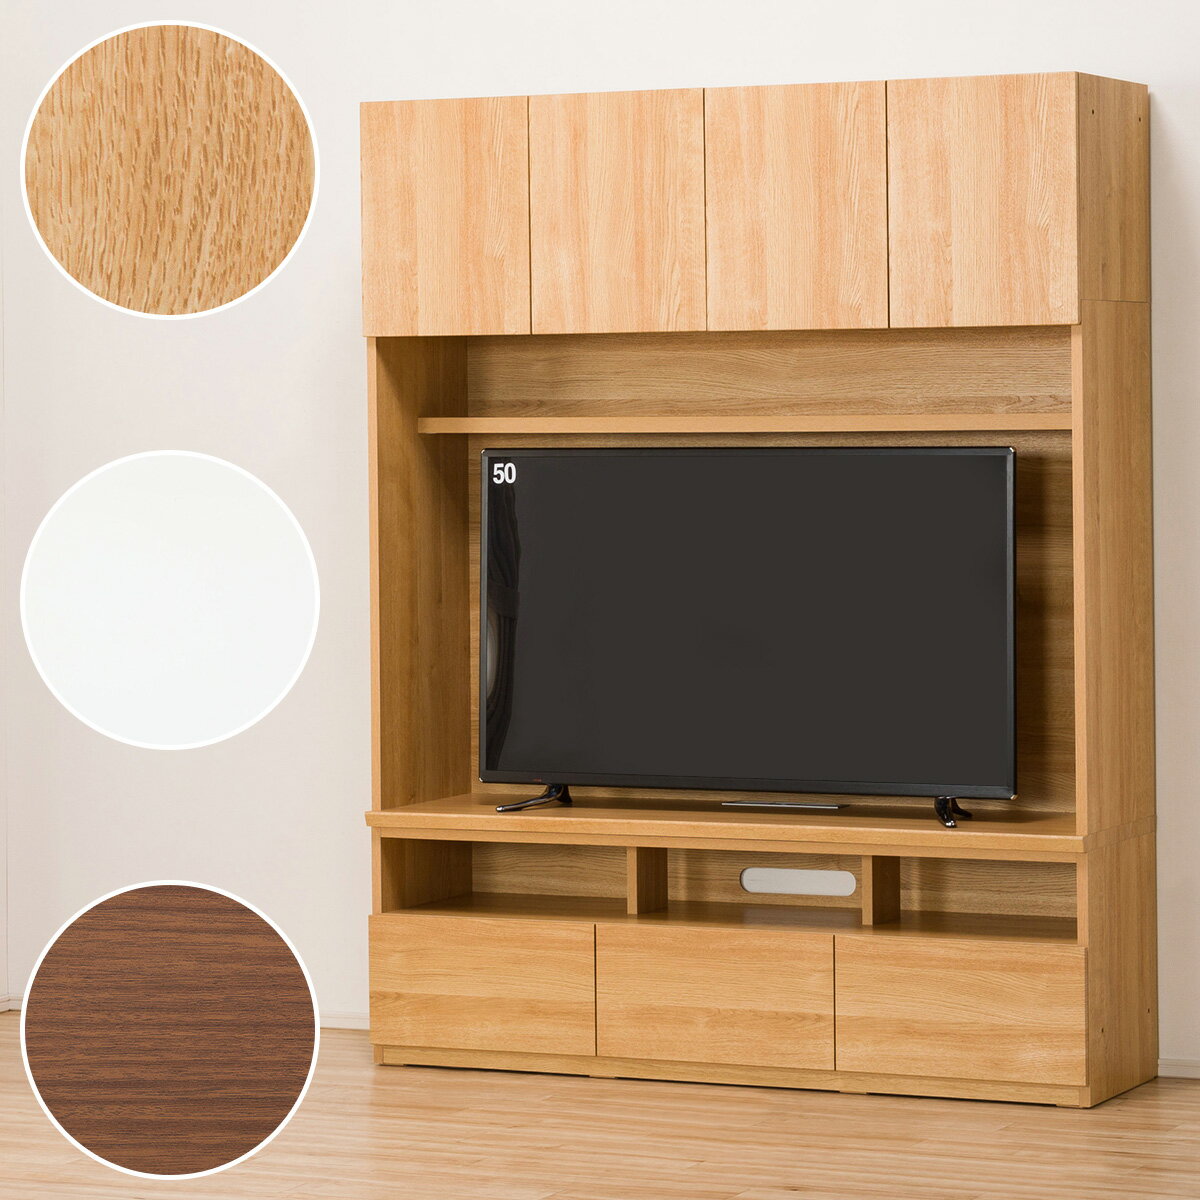 NITORI（ニトリ）『美しい光沢の壁面収納シリーズテレビボード』